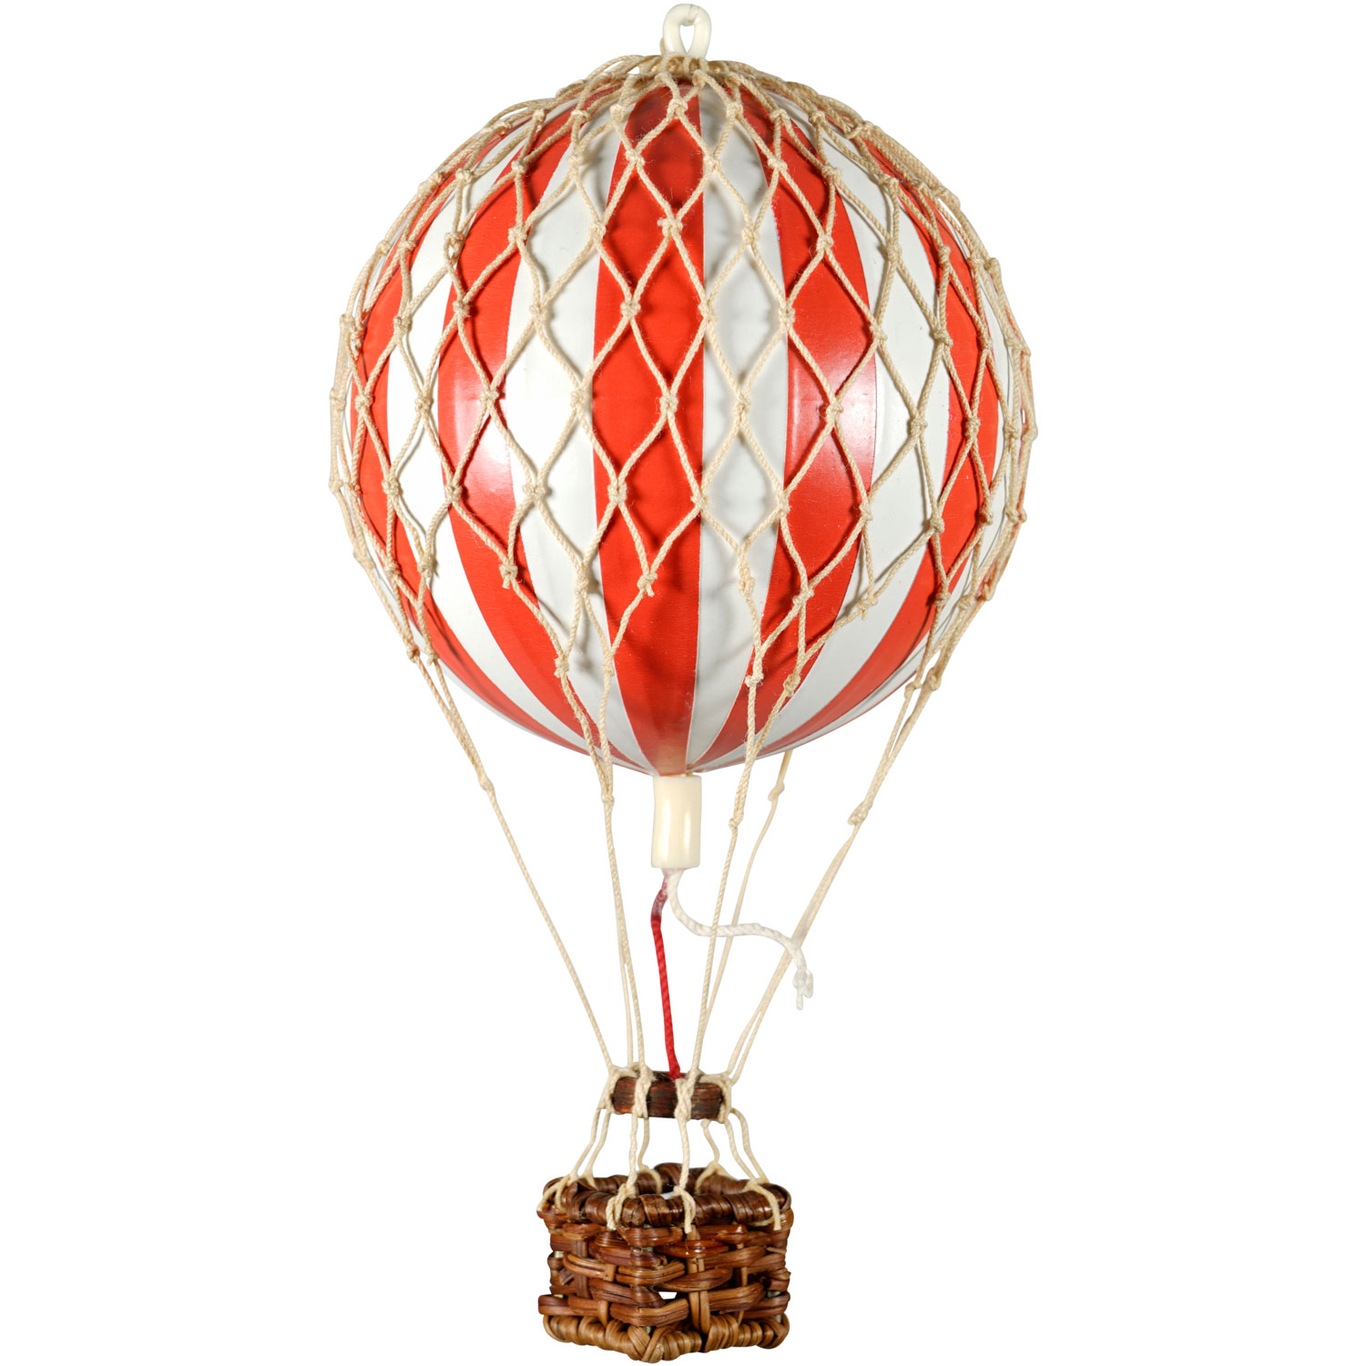 Floating The Skies Heißluftballon 13x8.5 cm, Rot / Weiß